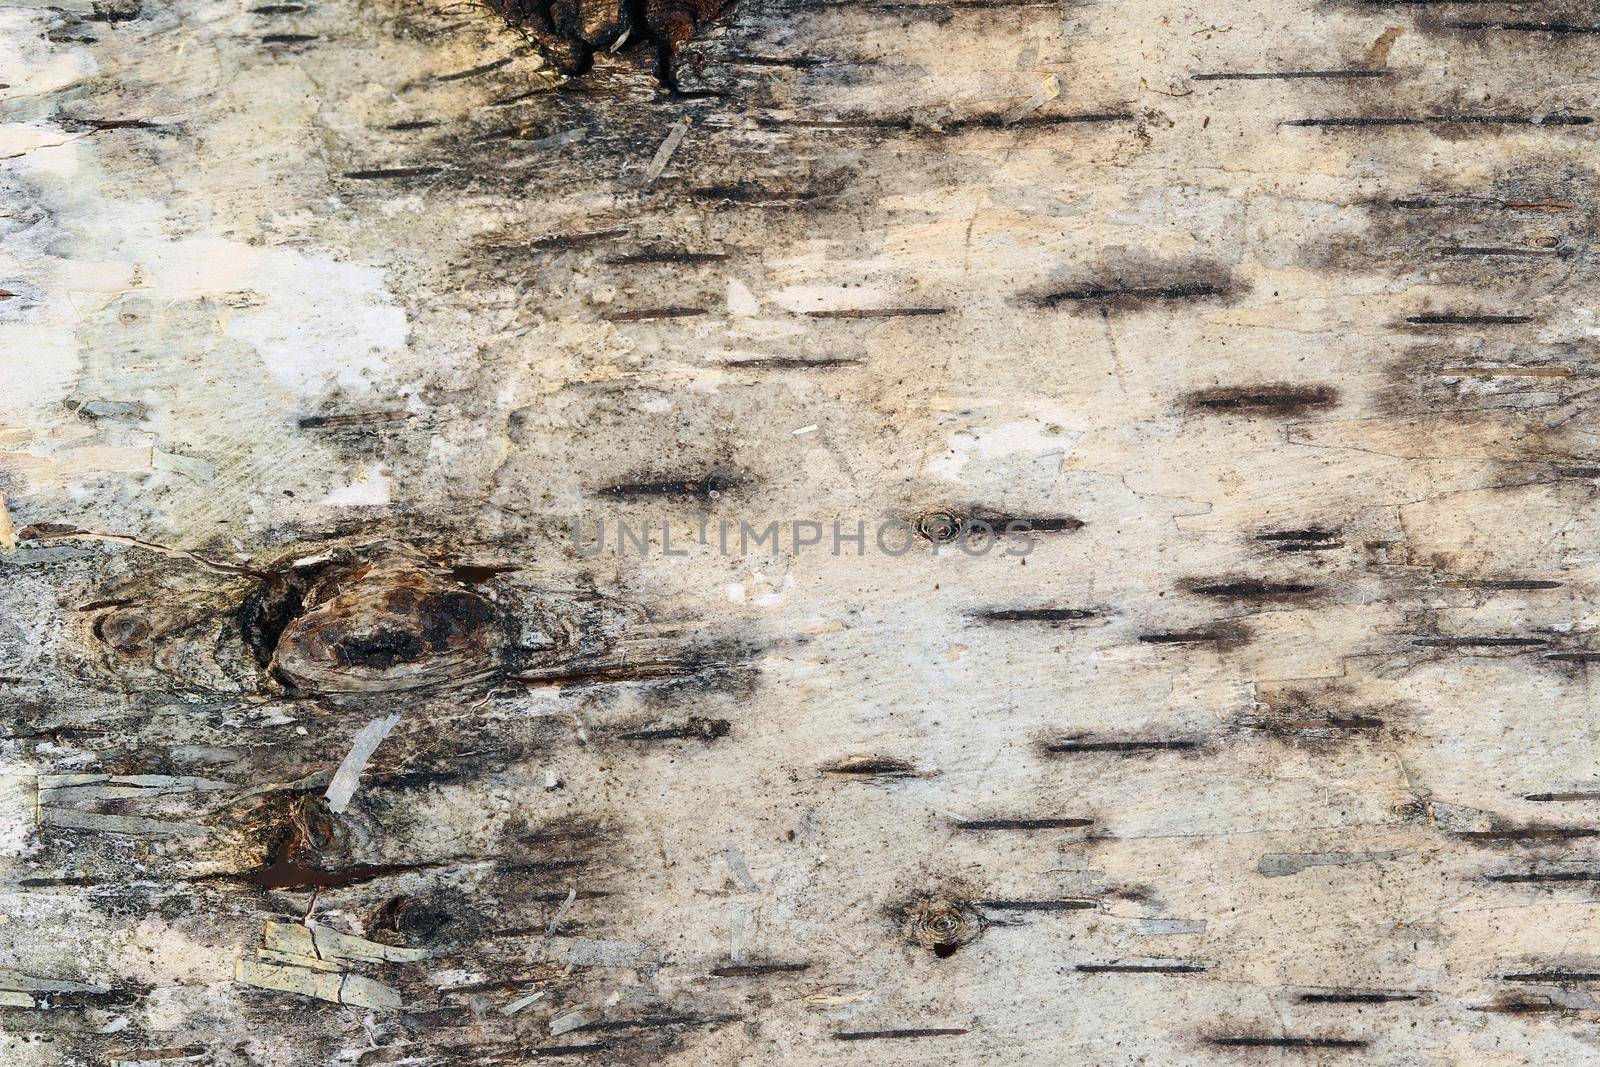 Strip of birch bark by Mibuch